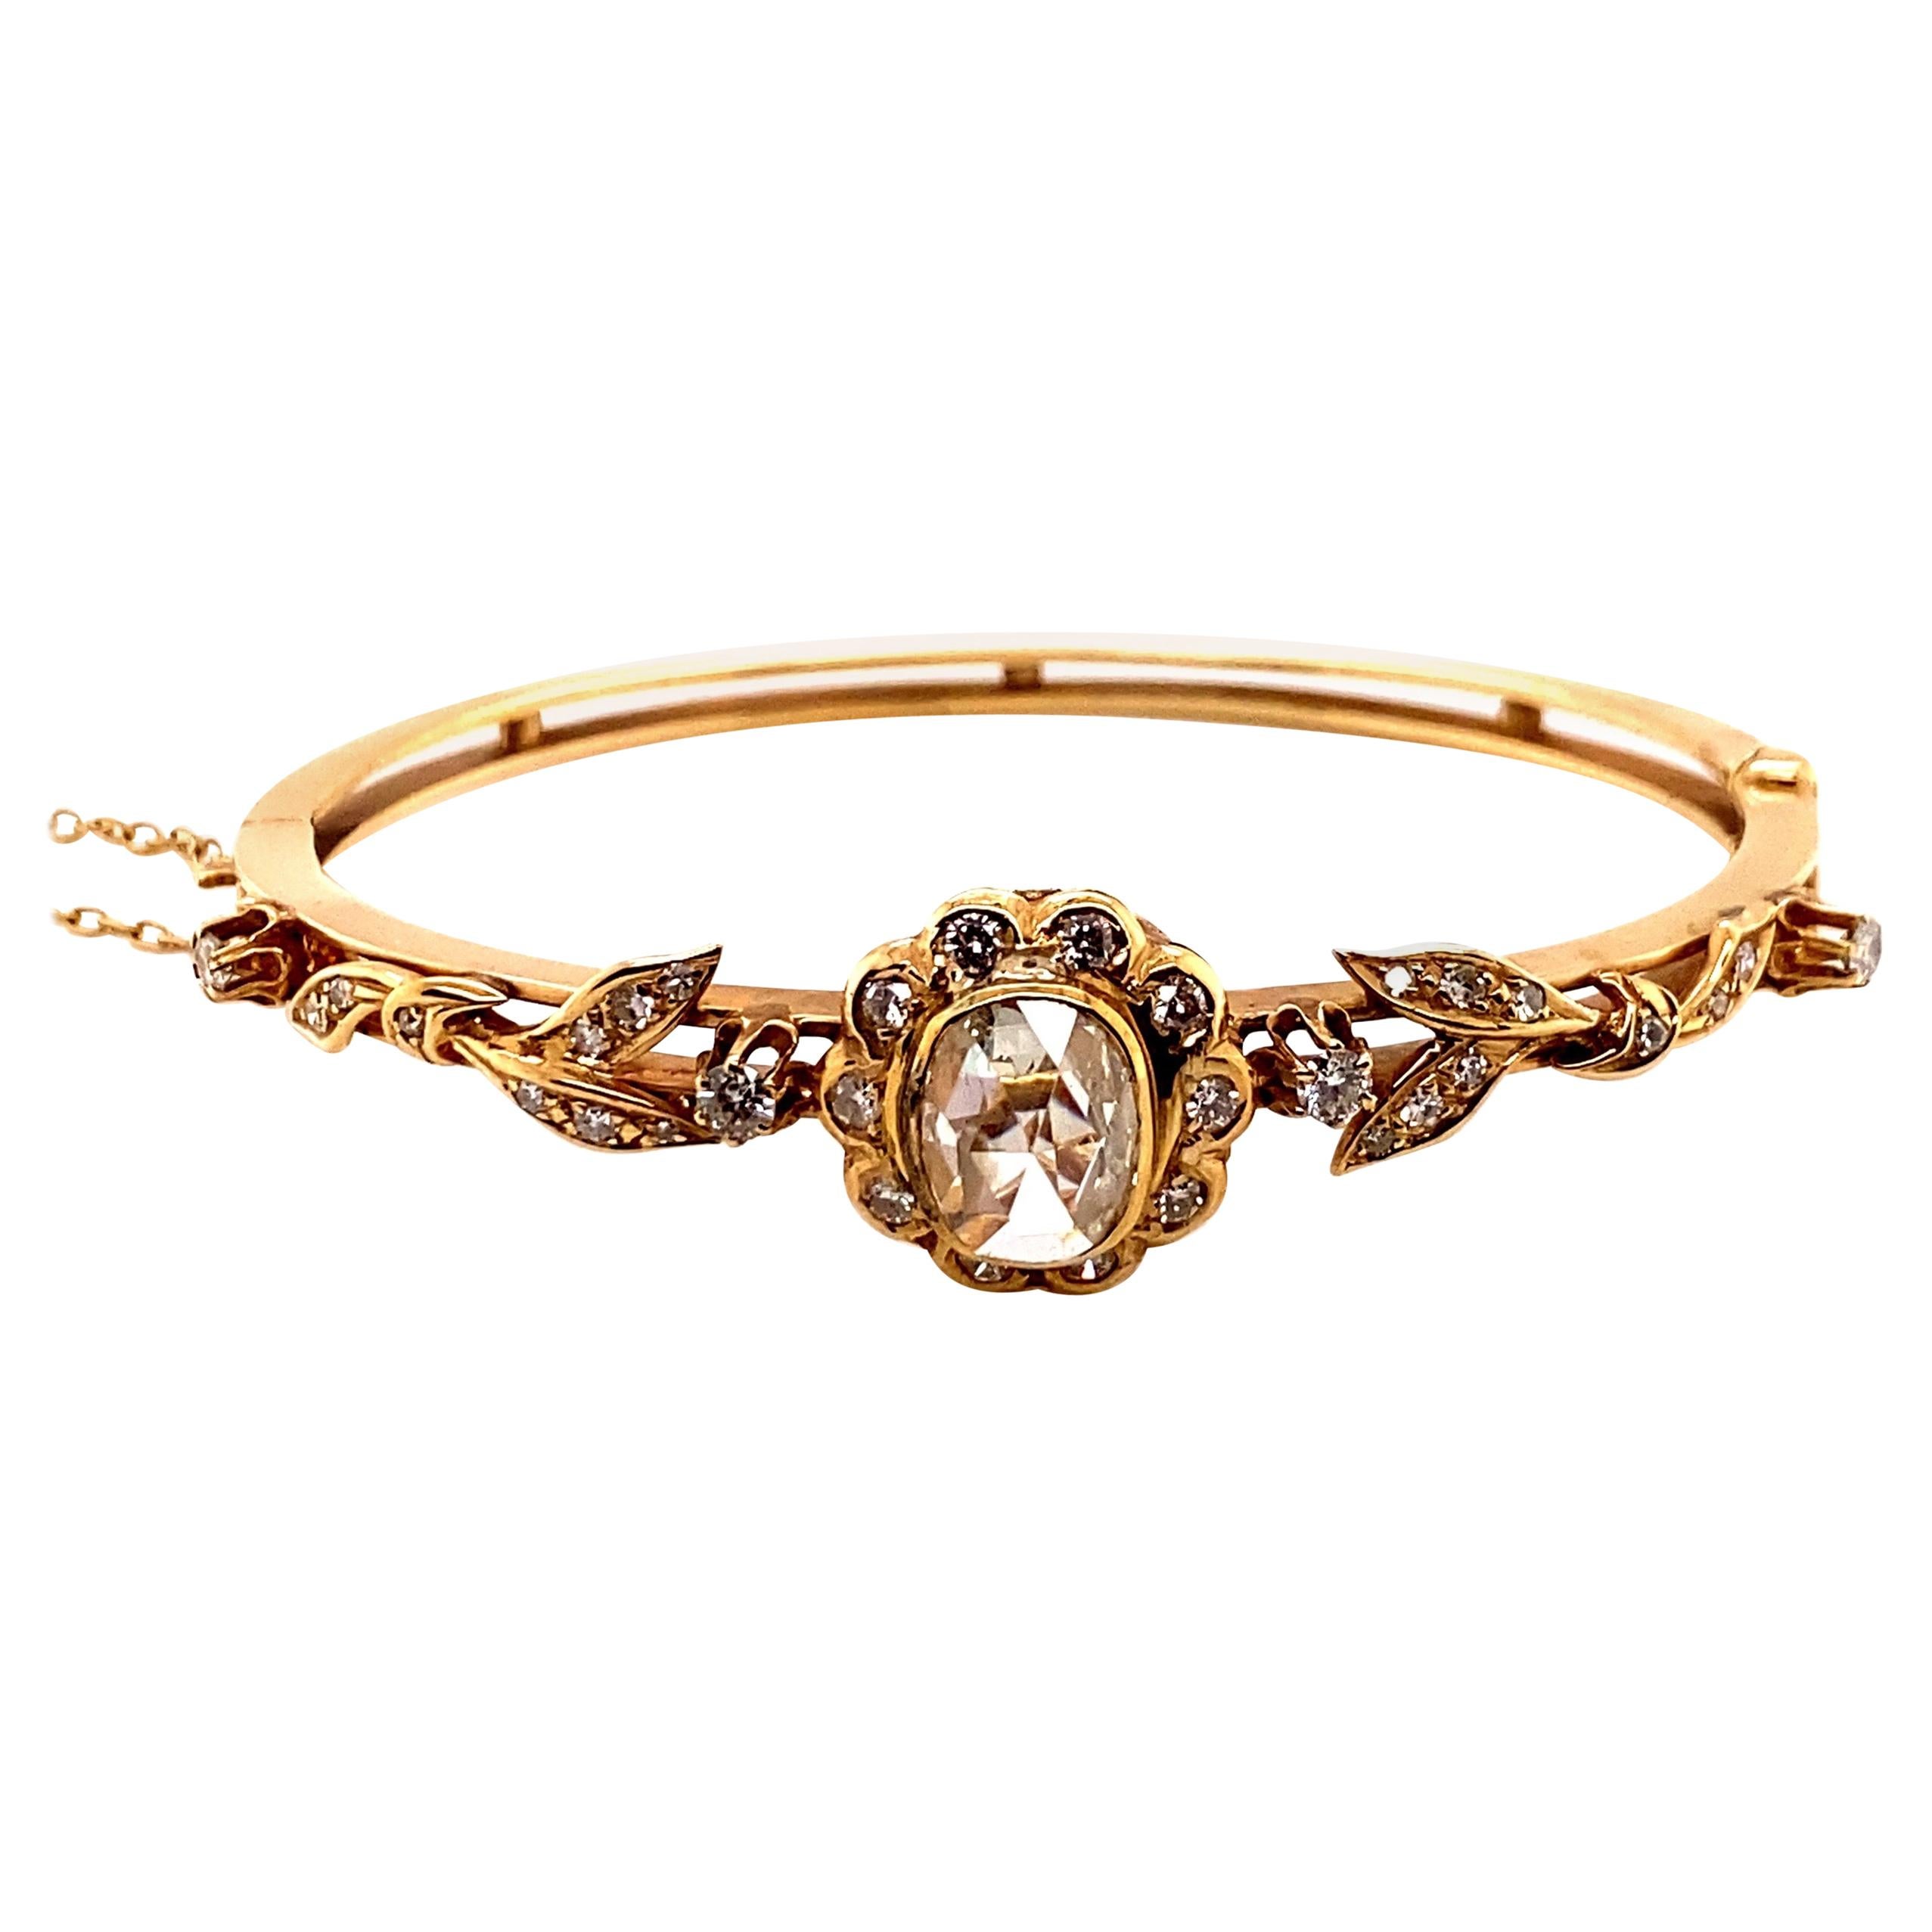 Vintage 14k Yellow Gold Victorian Reproduction Rose Cut Diamond Bangle Bracelet